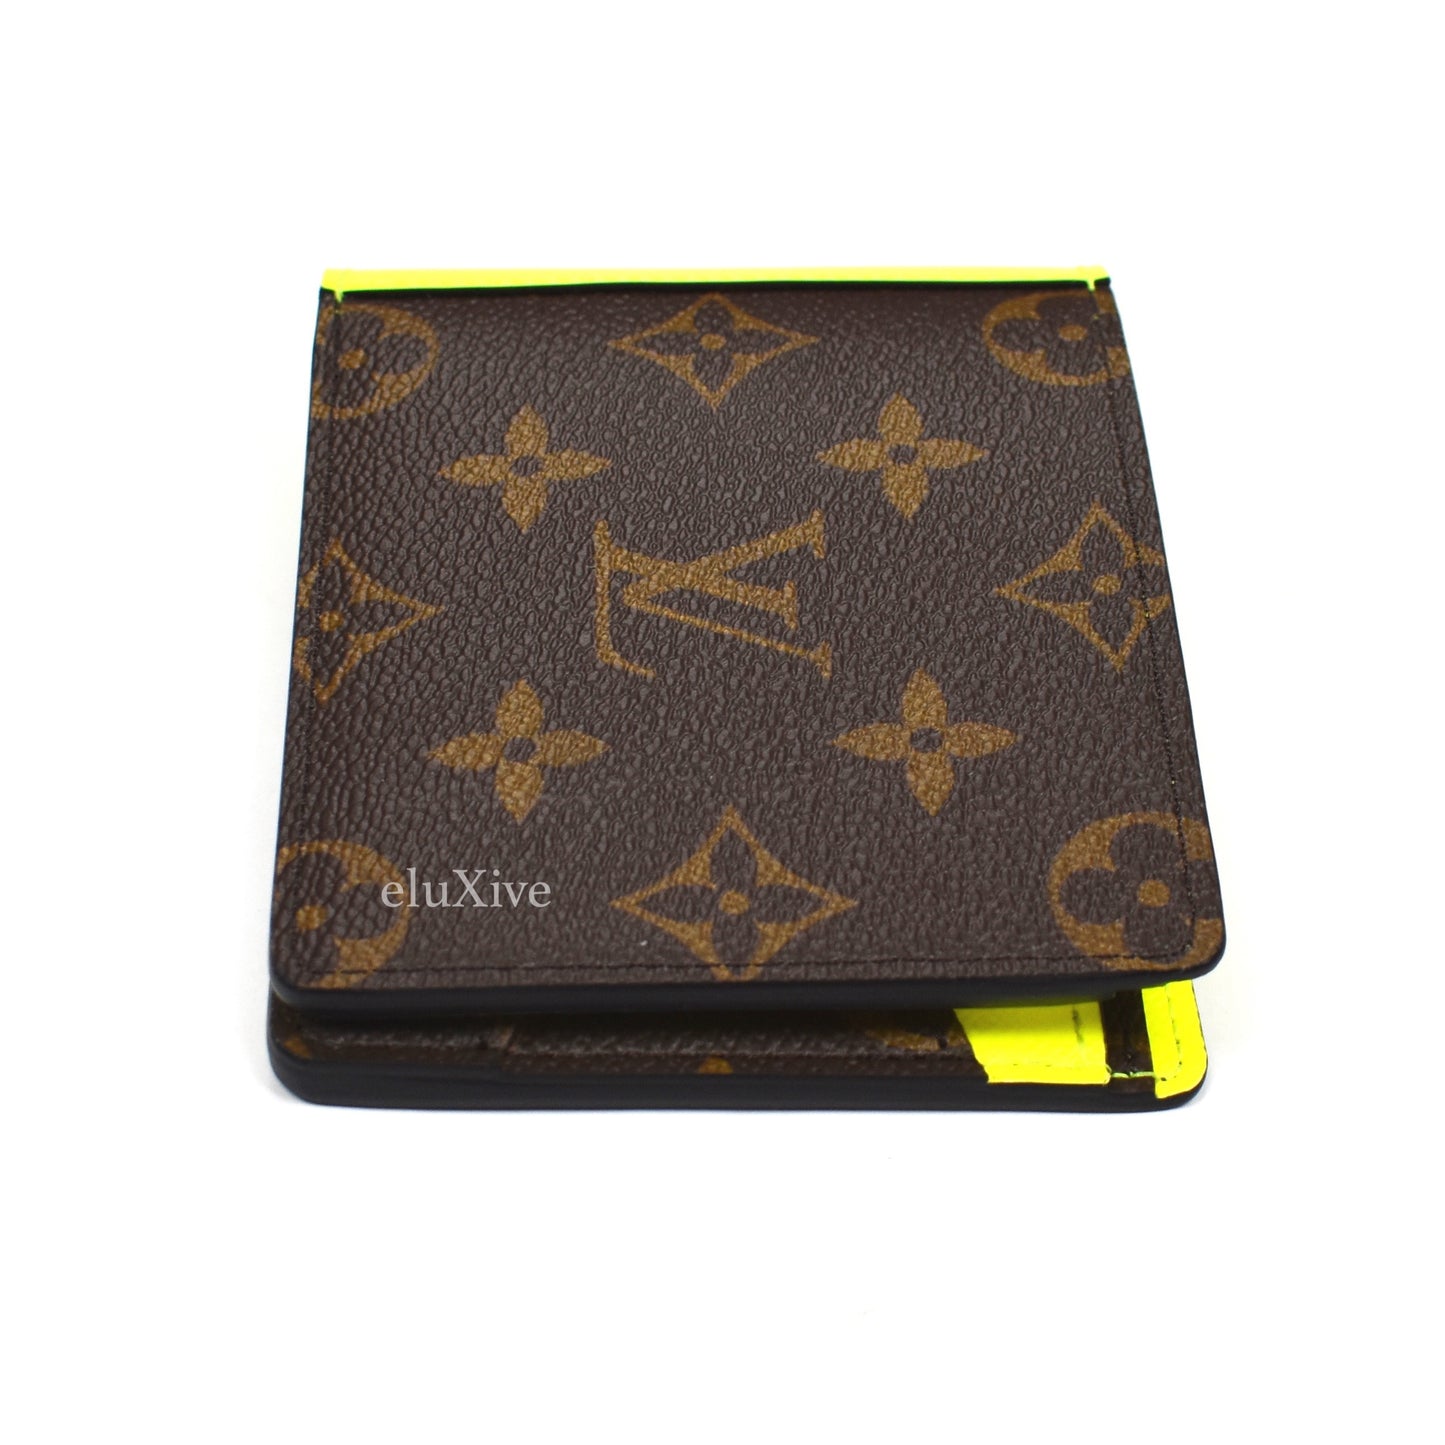 Louis Vuitton Monogram Macassar Multiple Wallet, Brown, * Inventory Confirmation Required